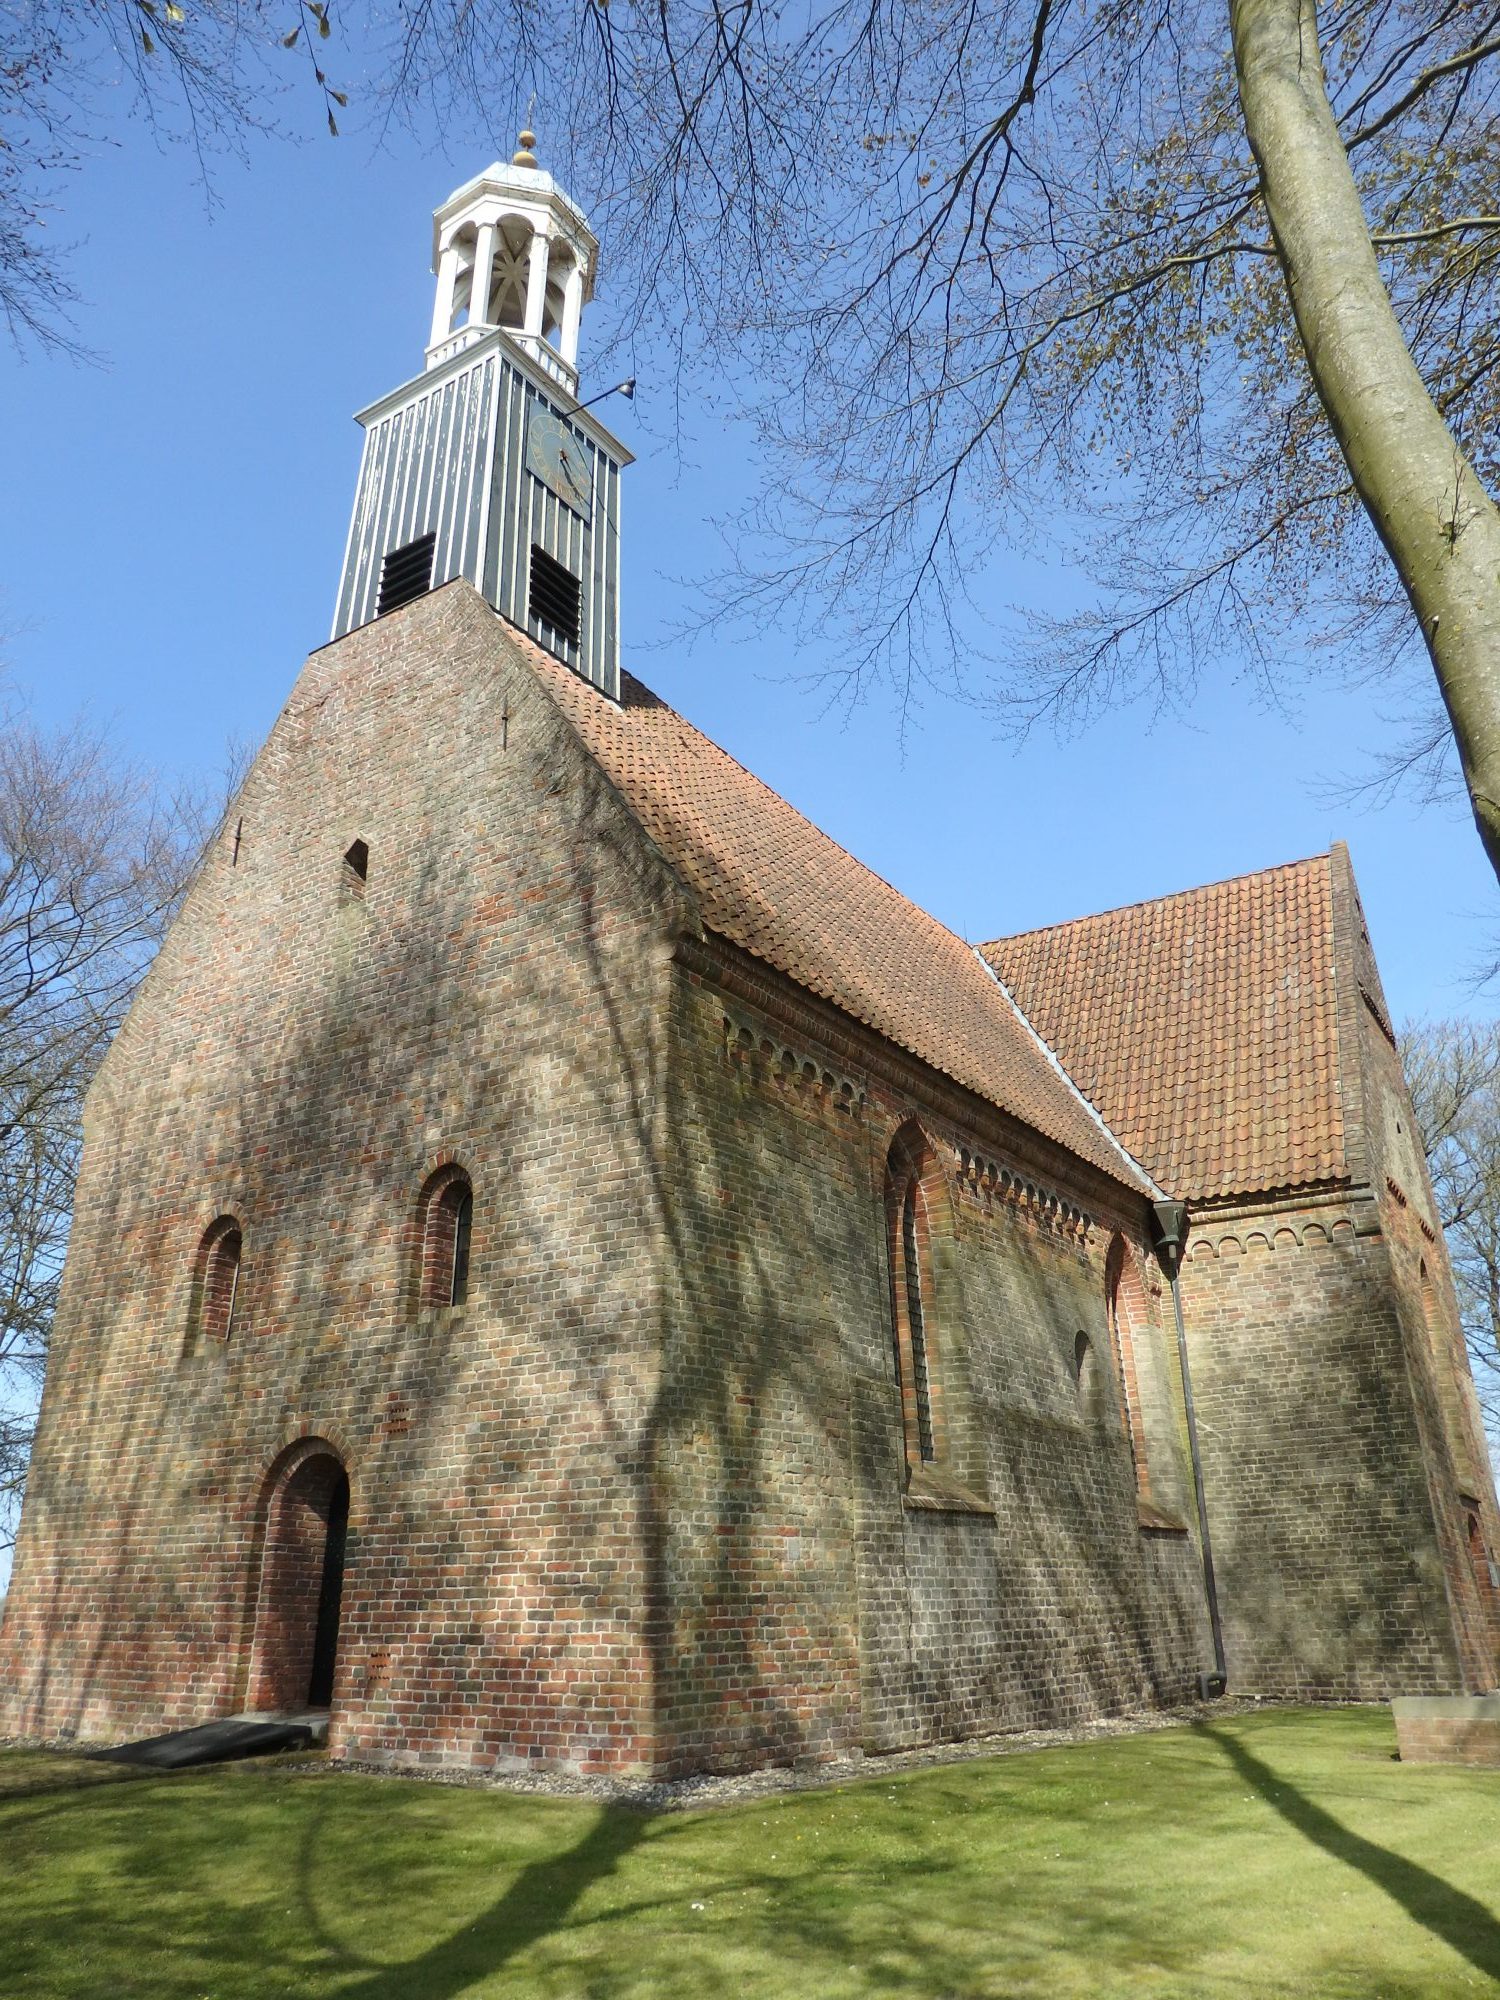 Leermens church in Groningen province